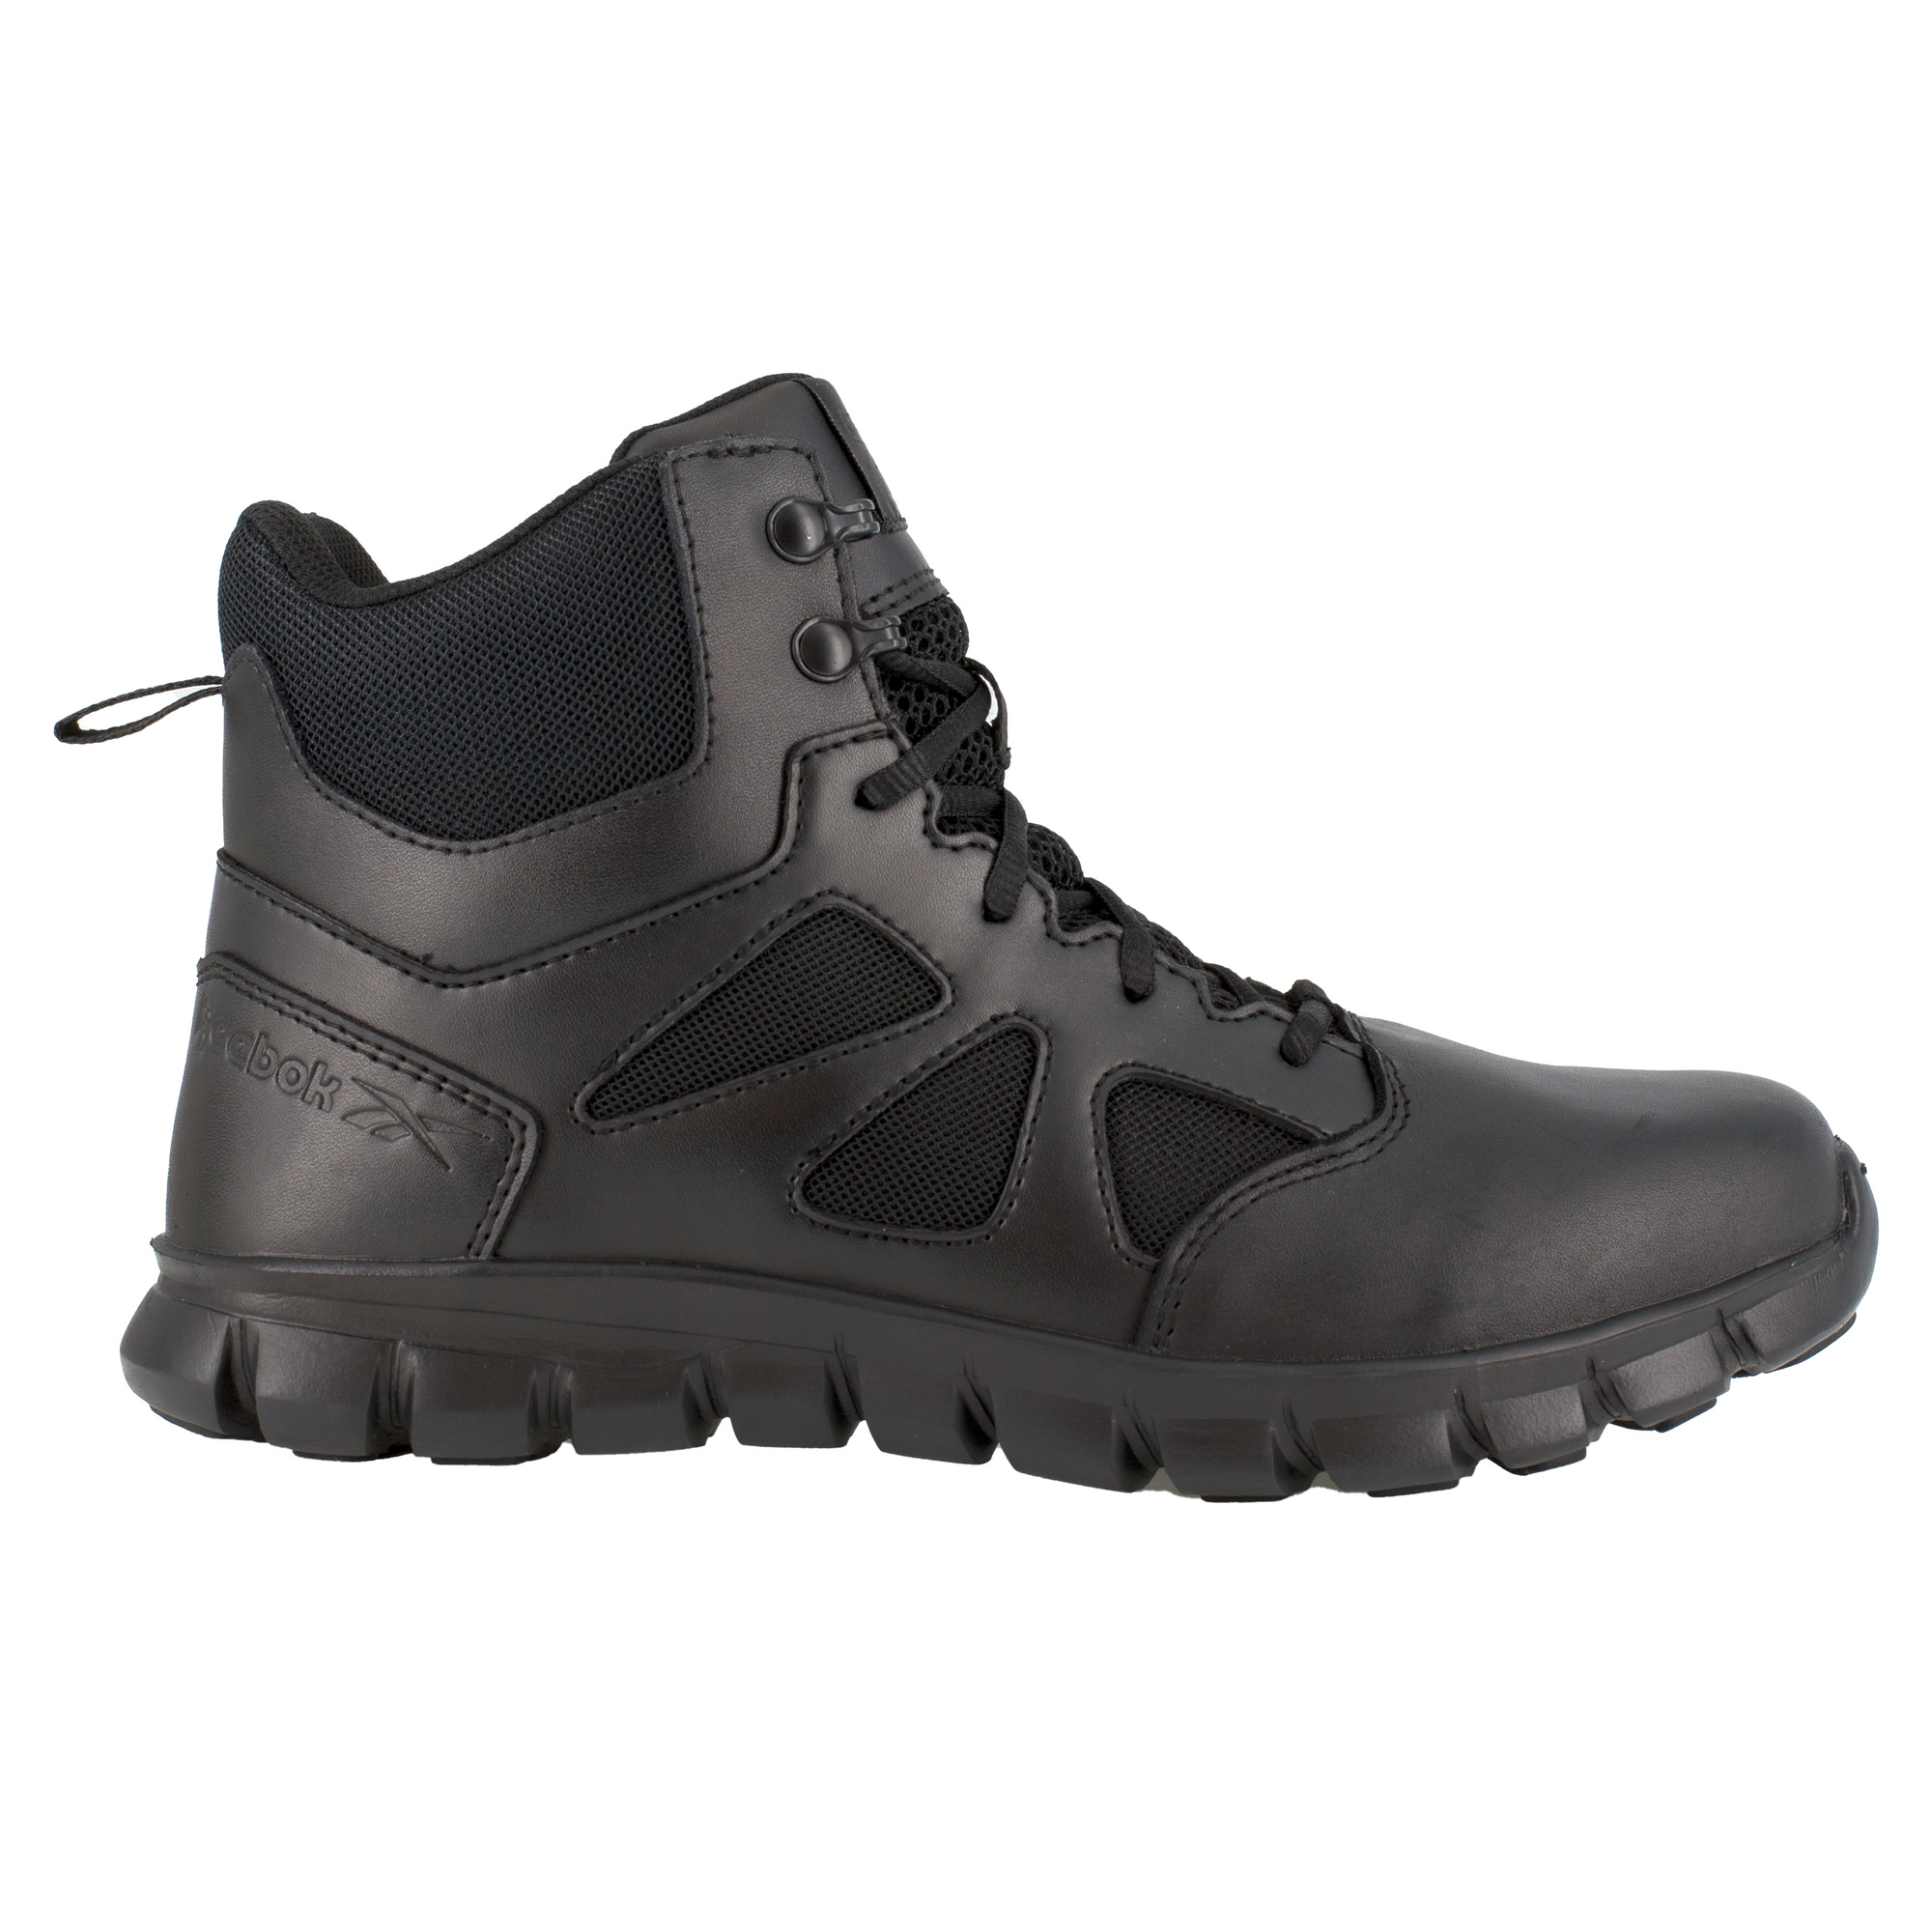 Reebok, 6Inch Tactical Boot w/Side Zipper, Size 8, Width Medium, Color Black, Model RB086